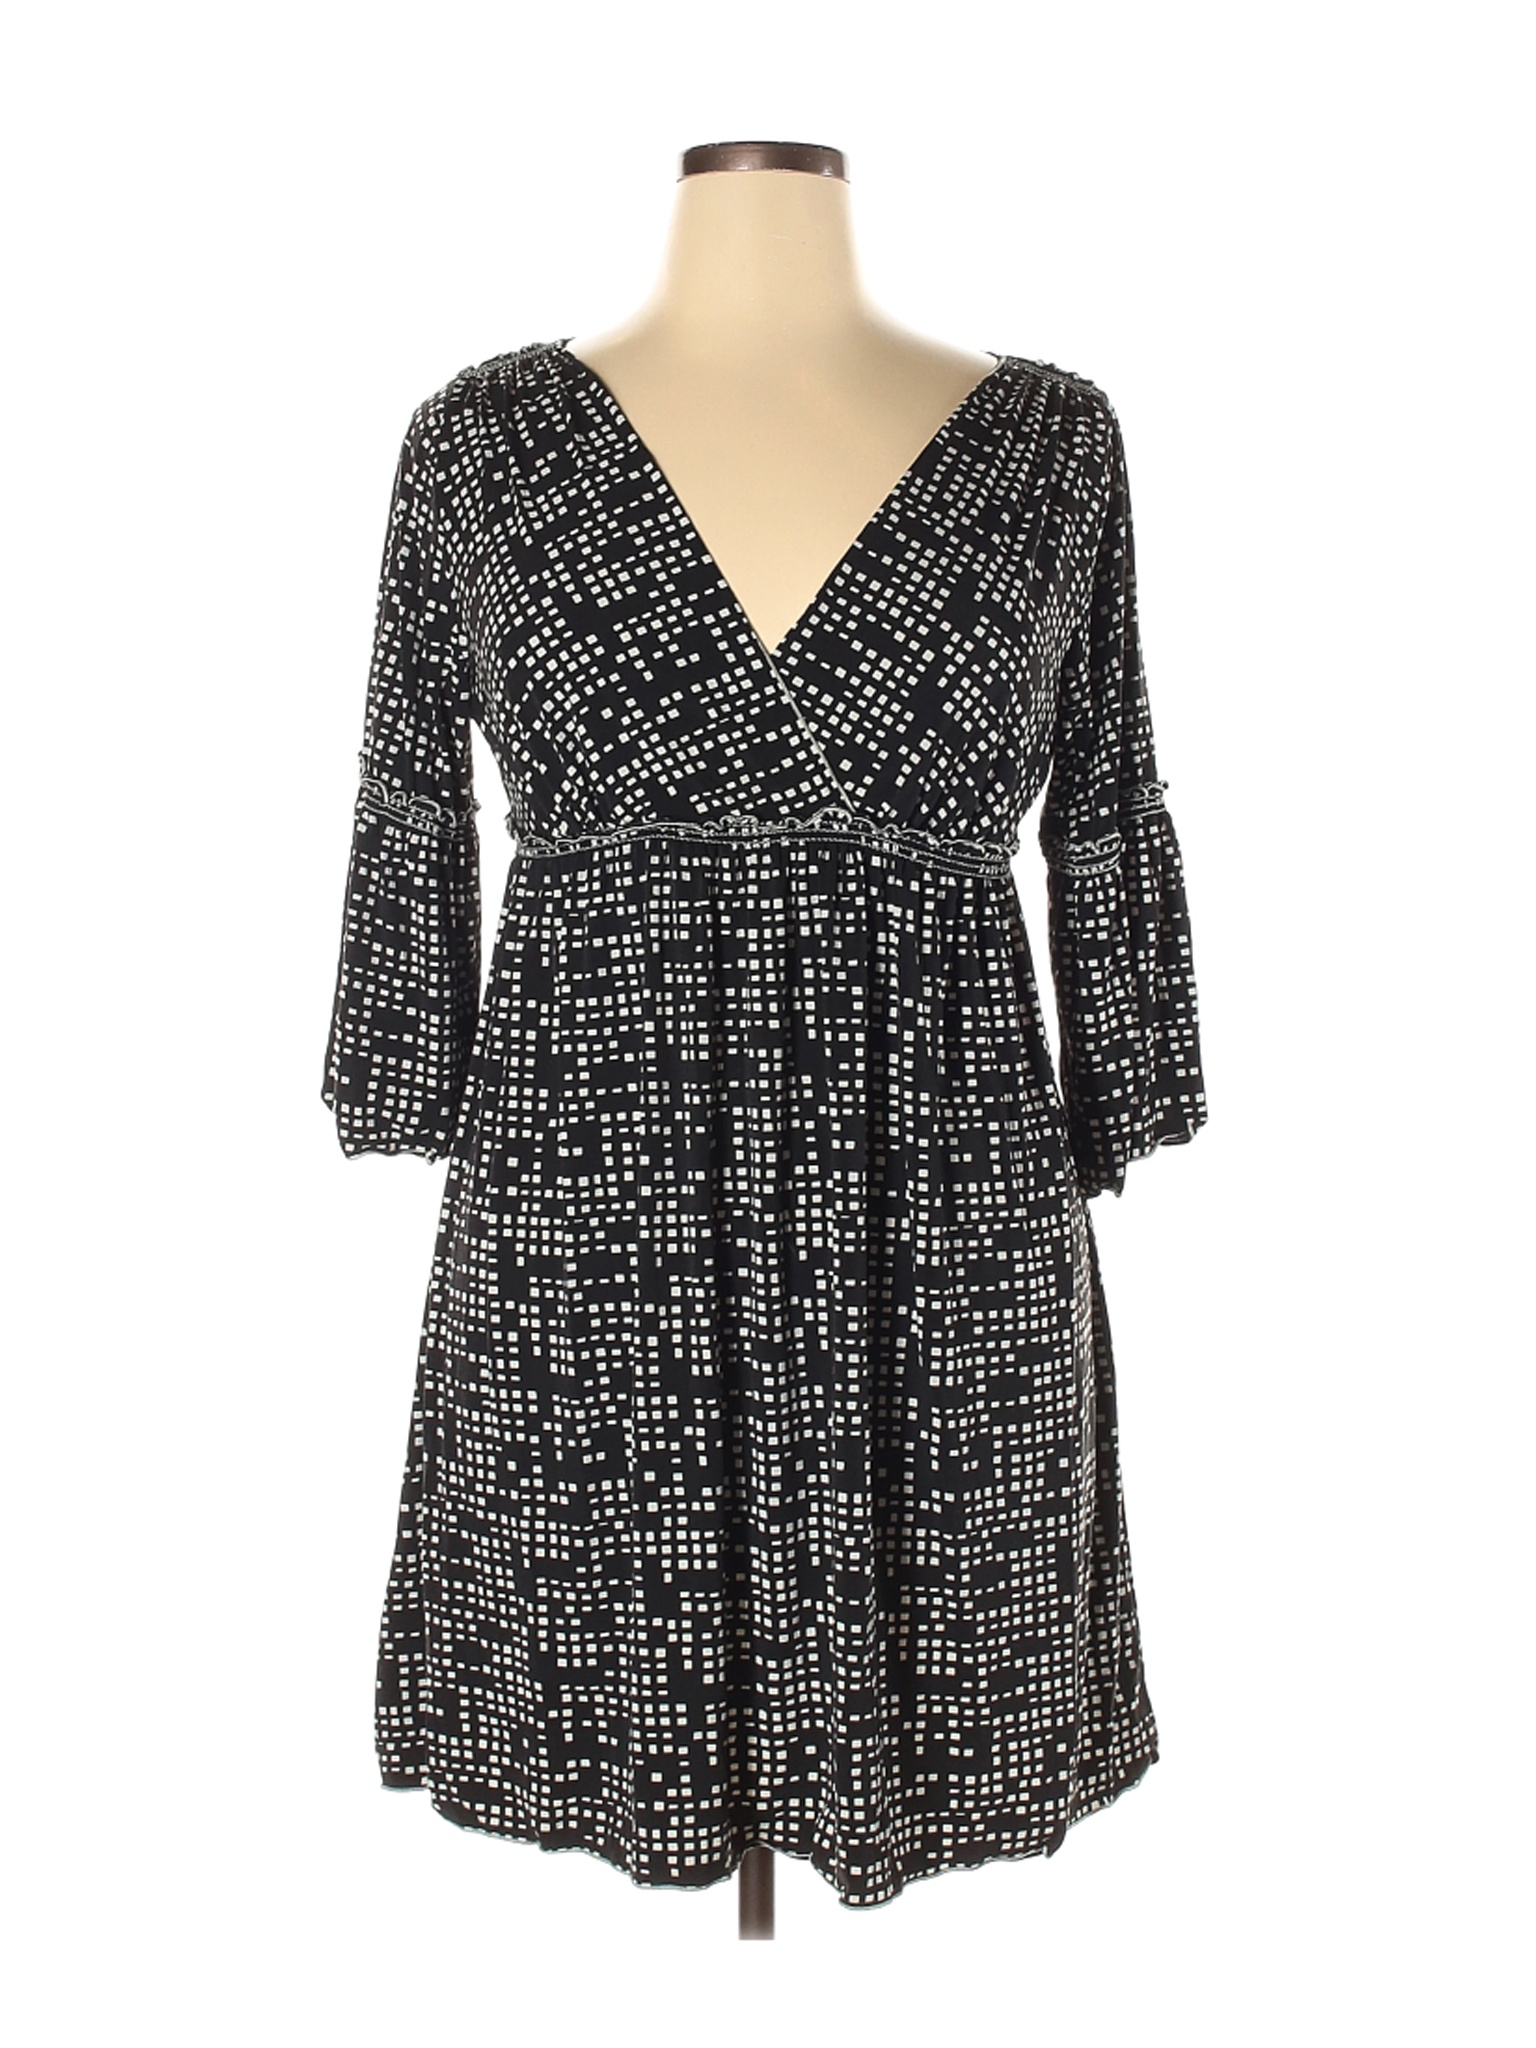 Max Edition Women Black Casual Dress XL | eBay